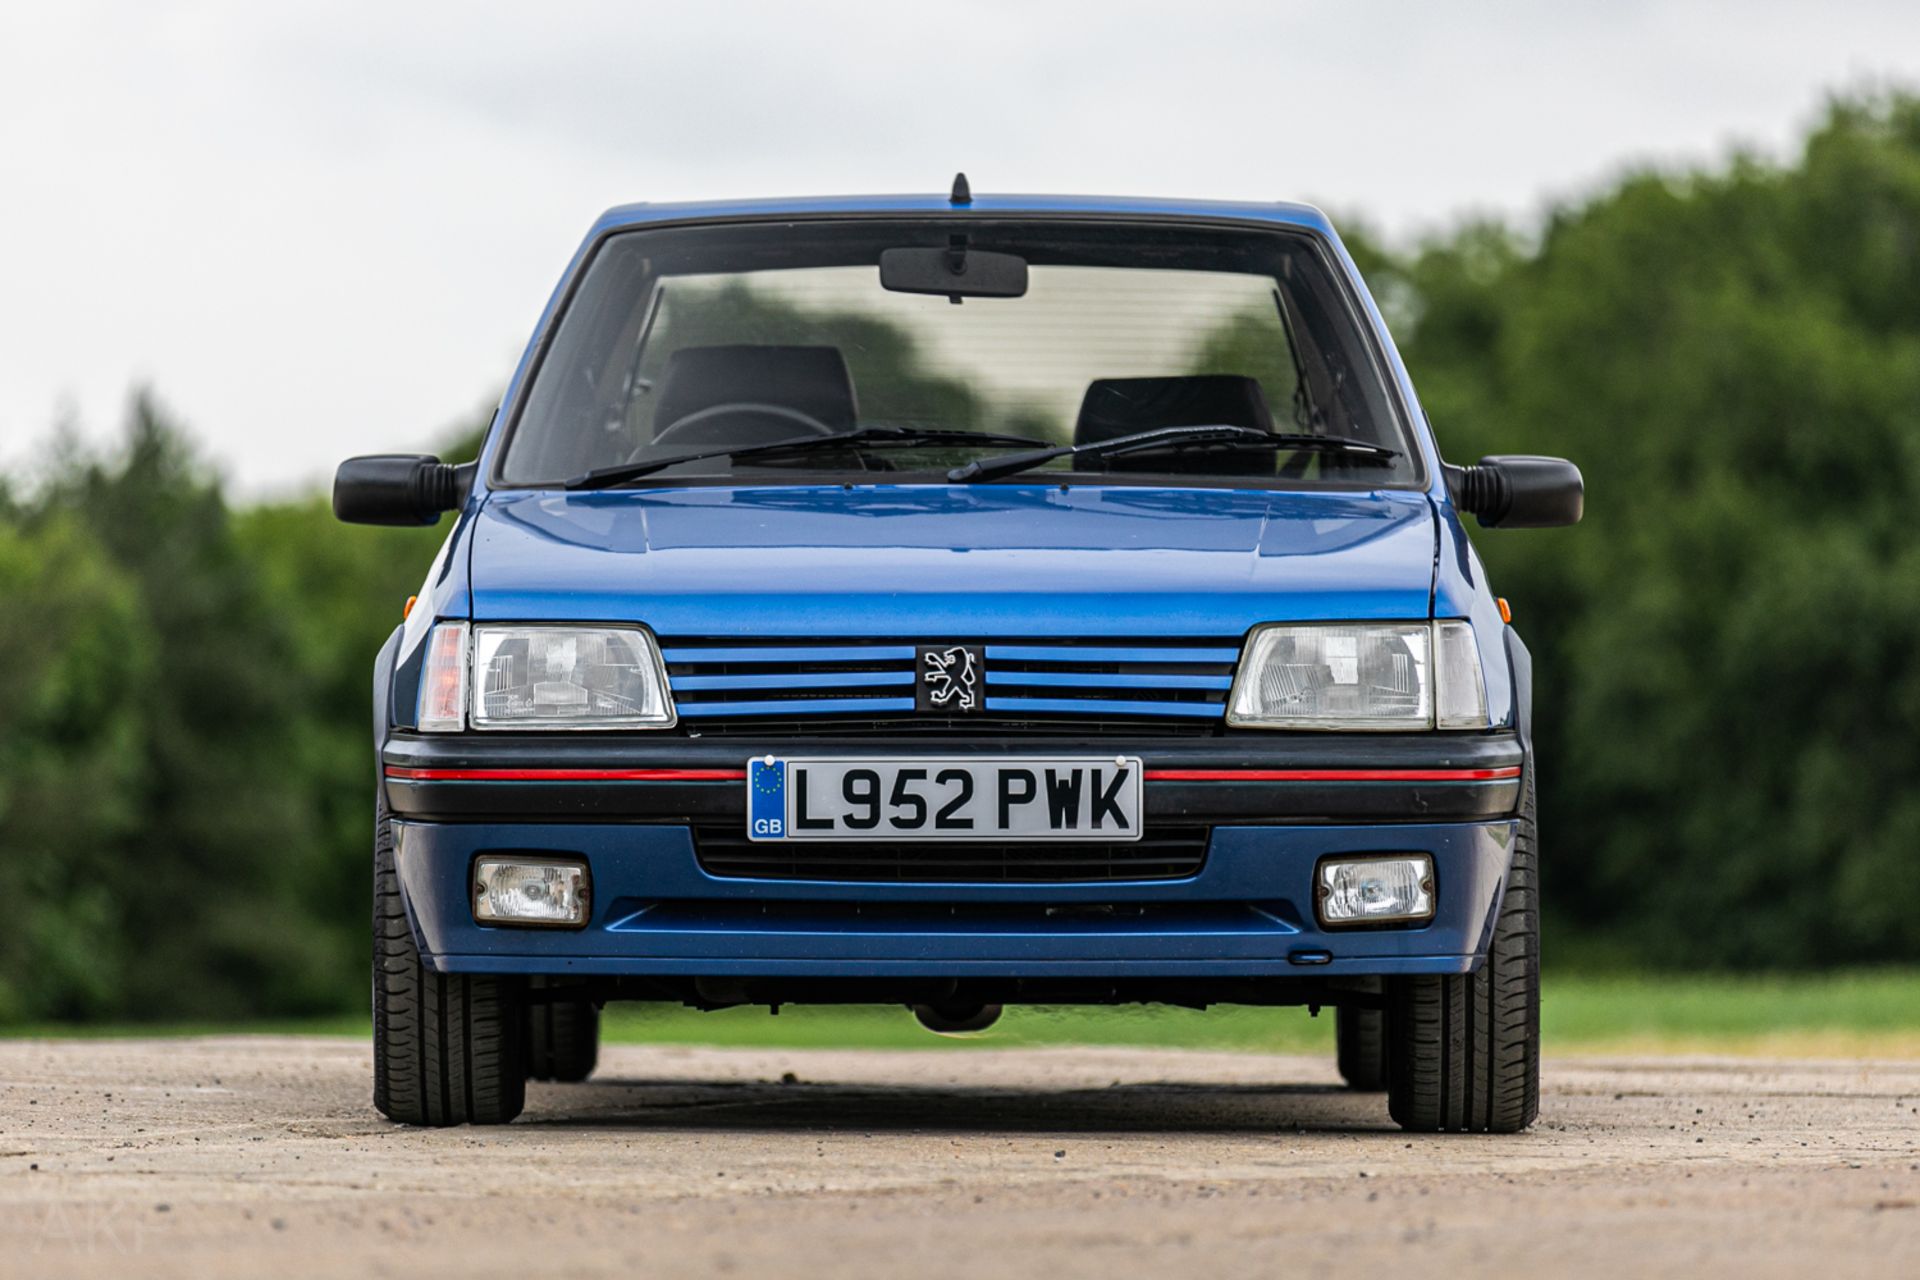 1993 Peugeot 205 1.9 GTI - Image 23 of 24